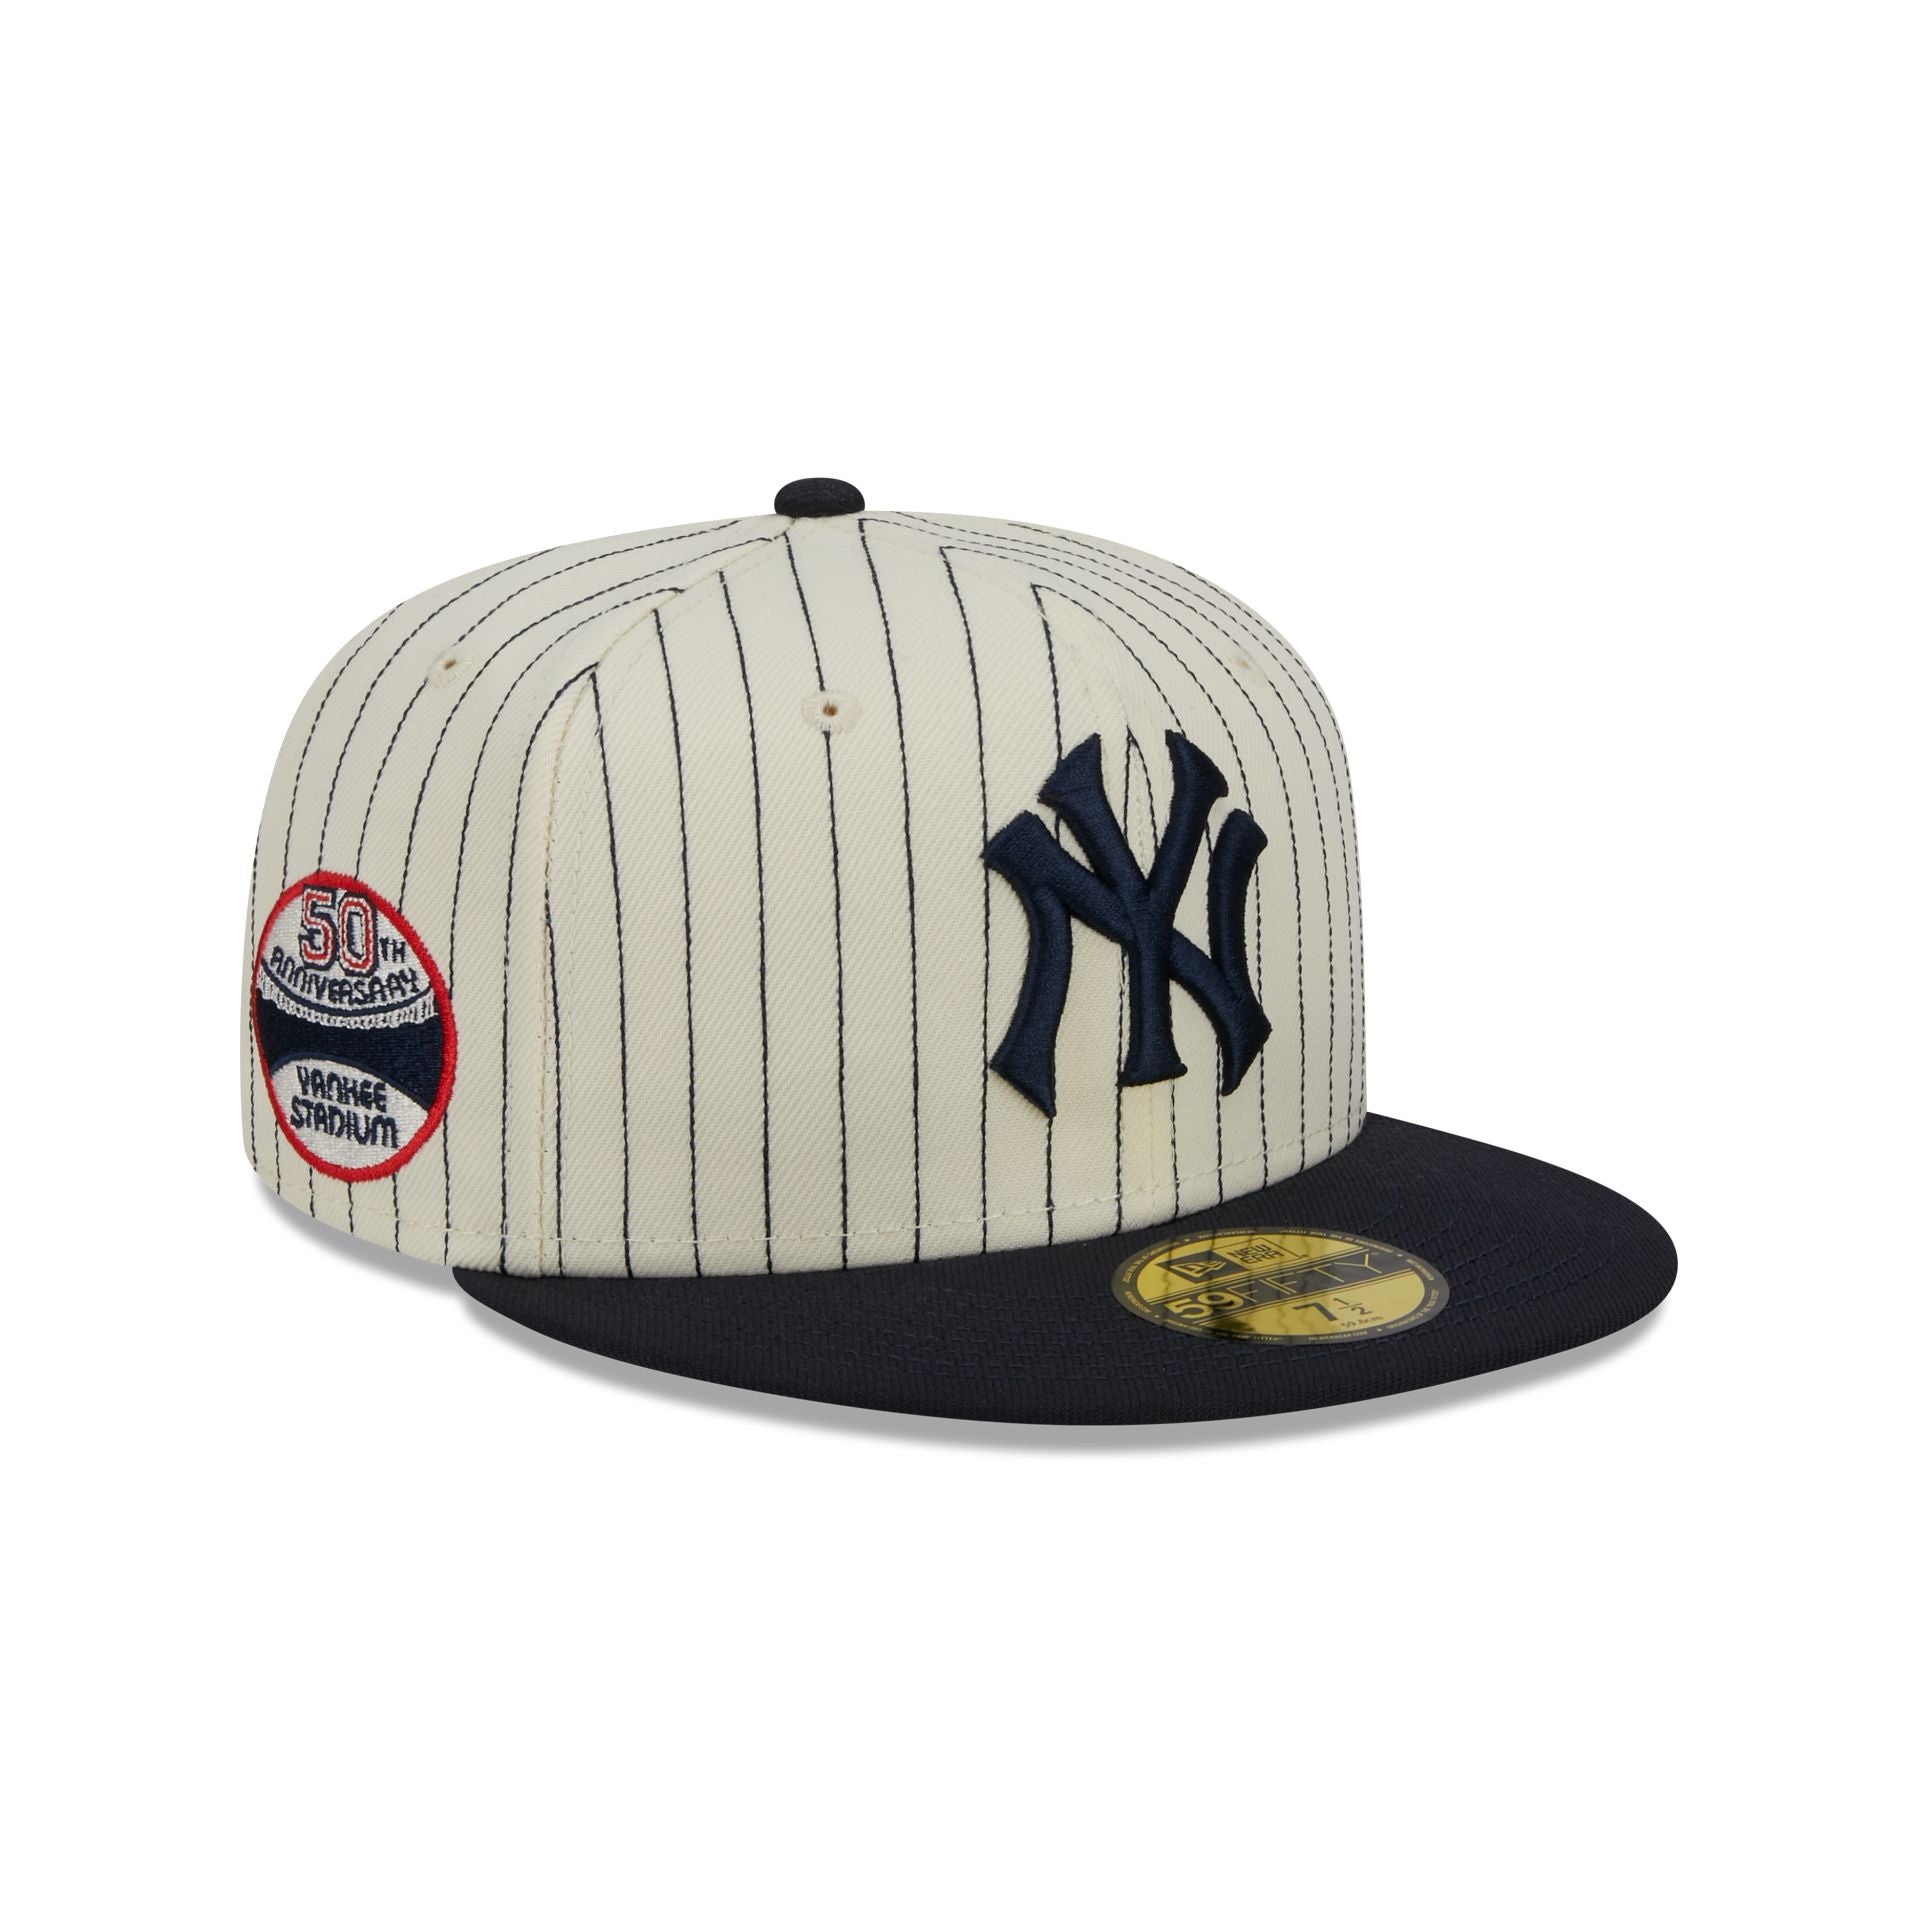 & York New New Era Cap Hats Yankees – Caps